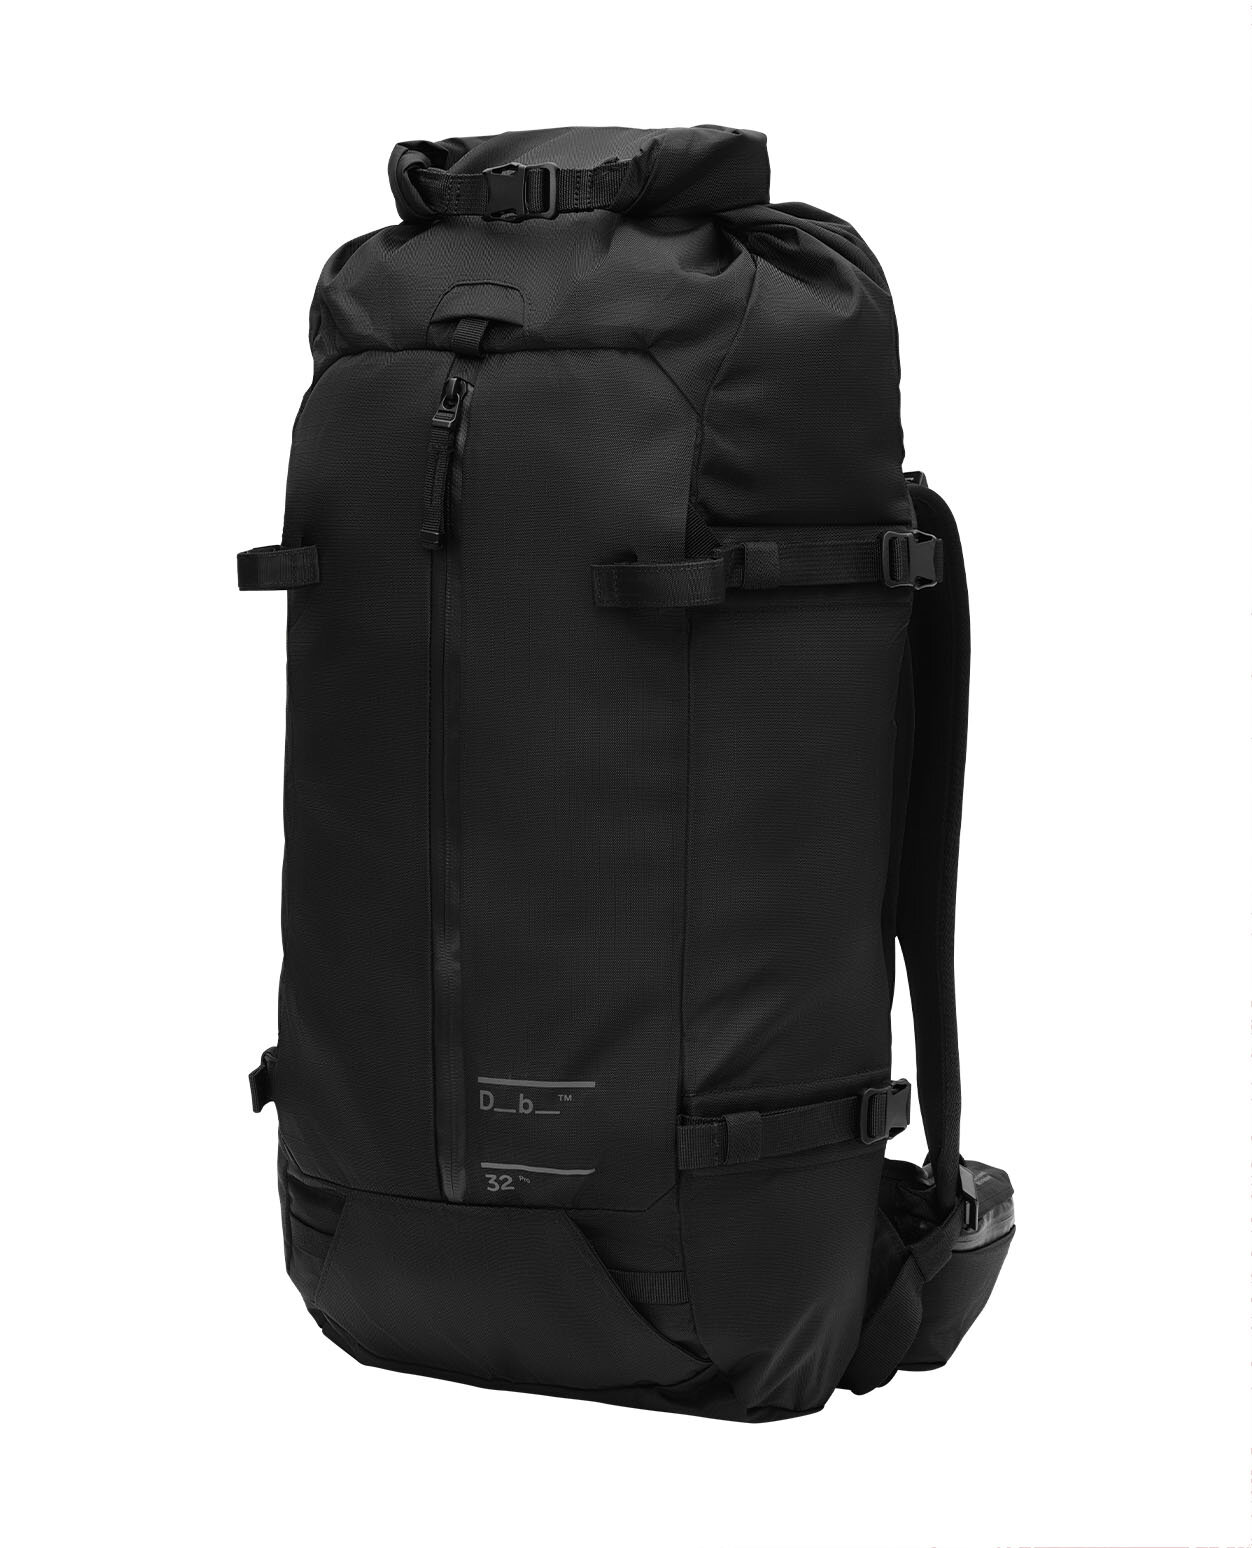 D_b_ Snow Pro Backpack 32L Black Out